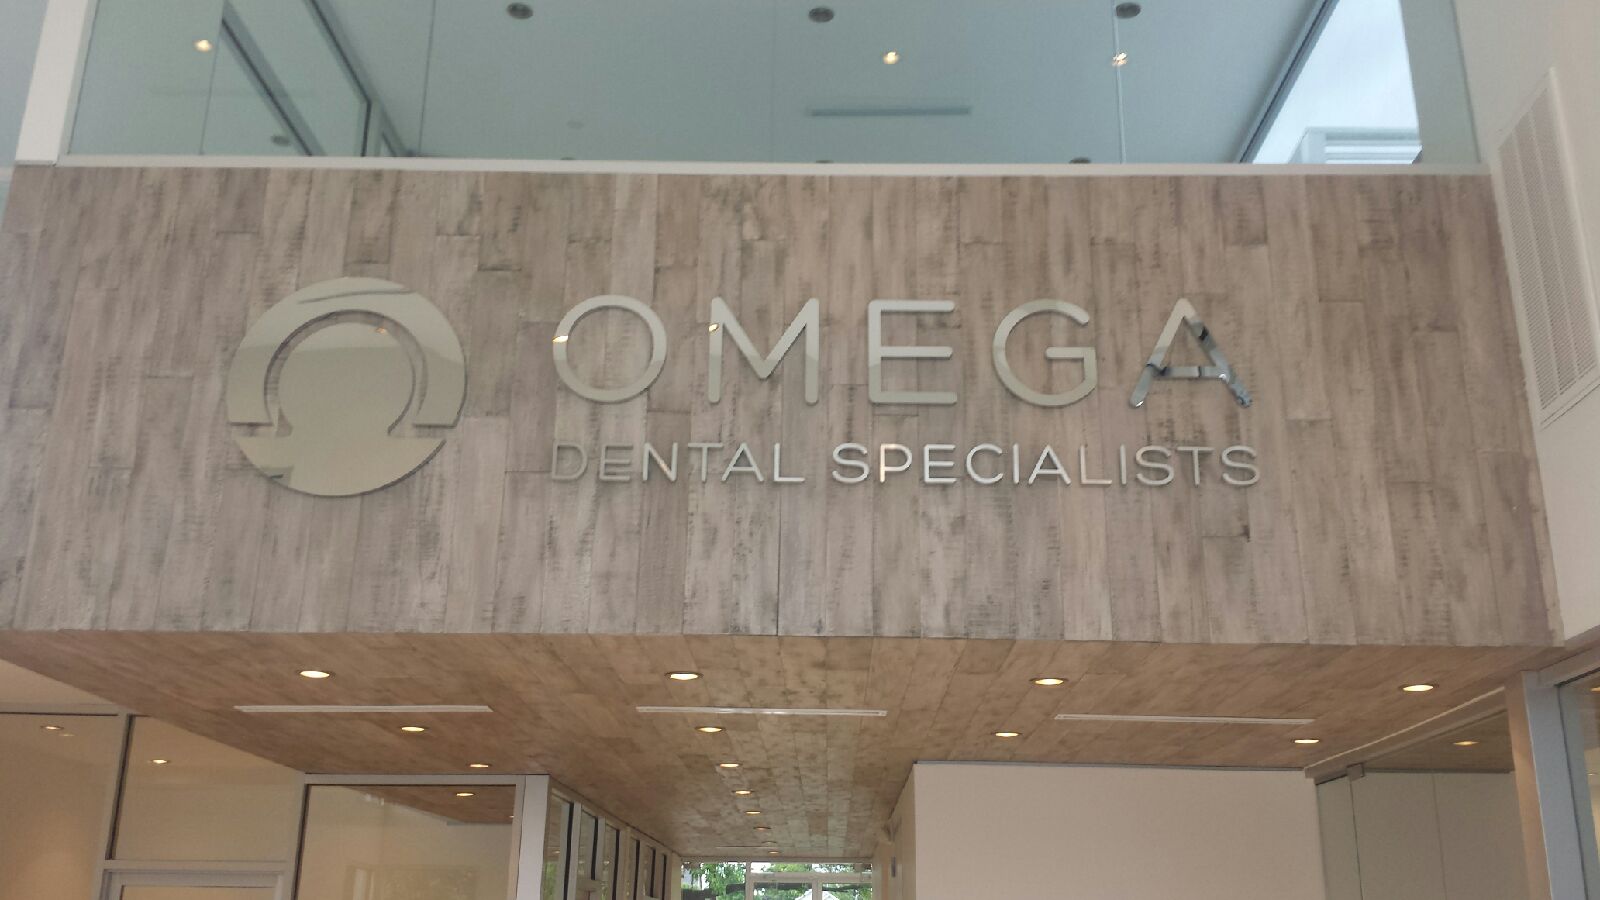 Omega Dental Specialists Photo